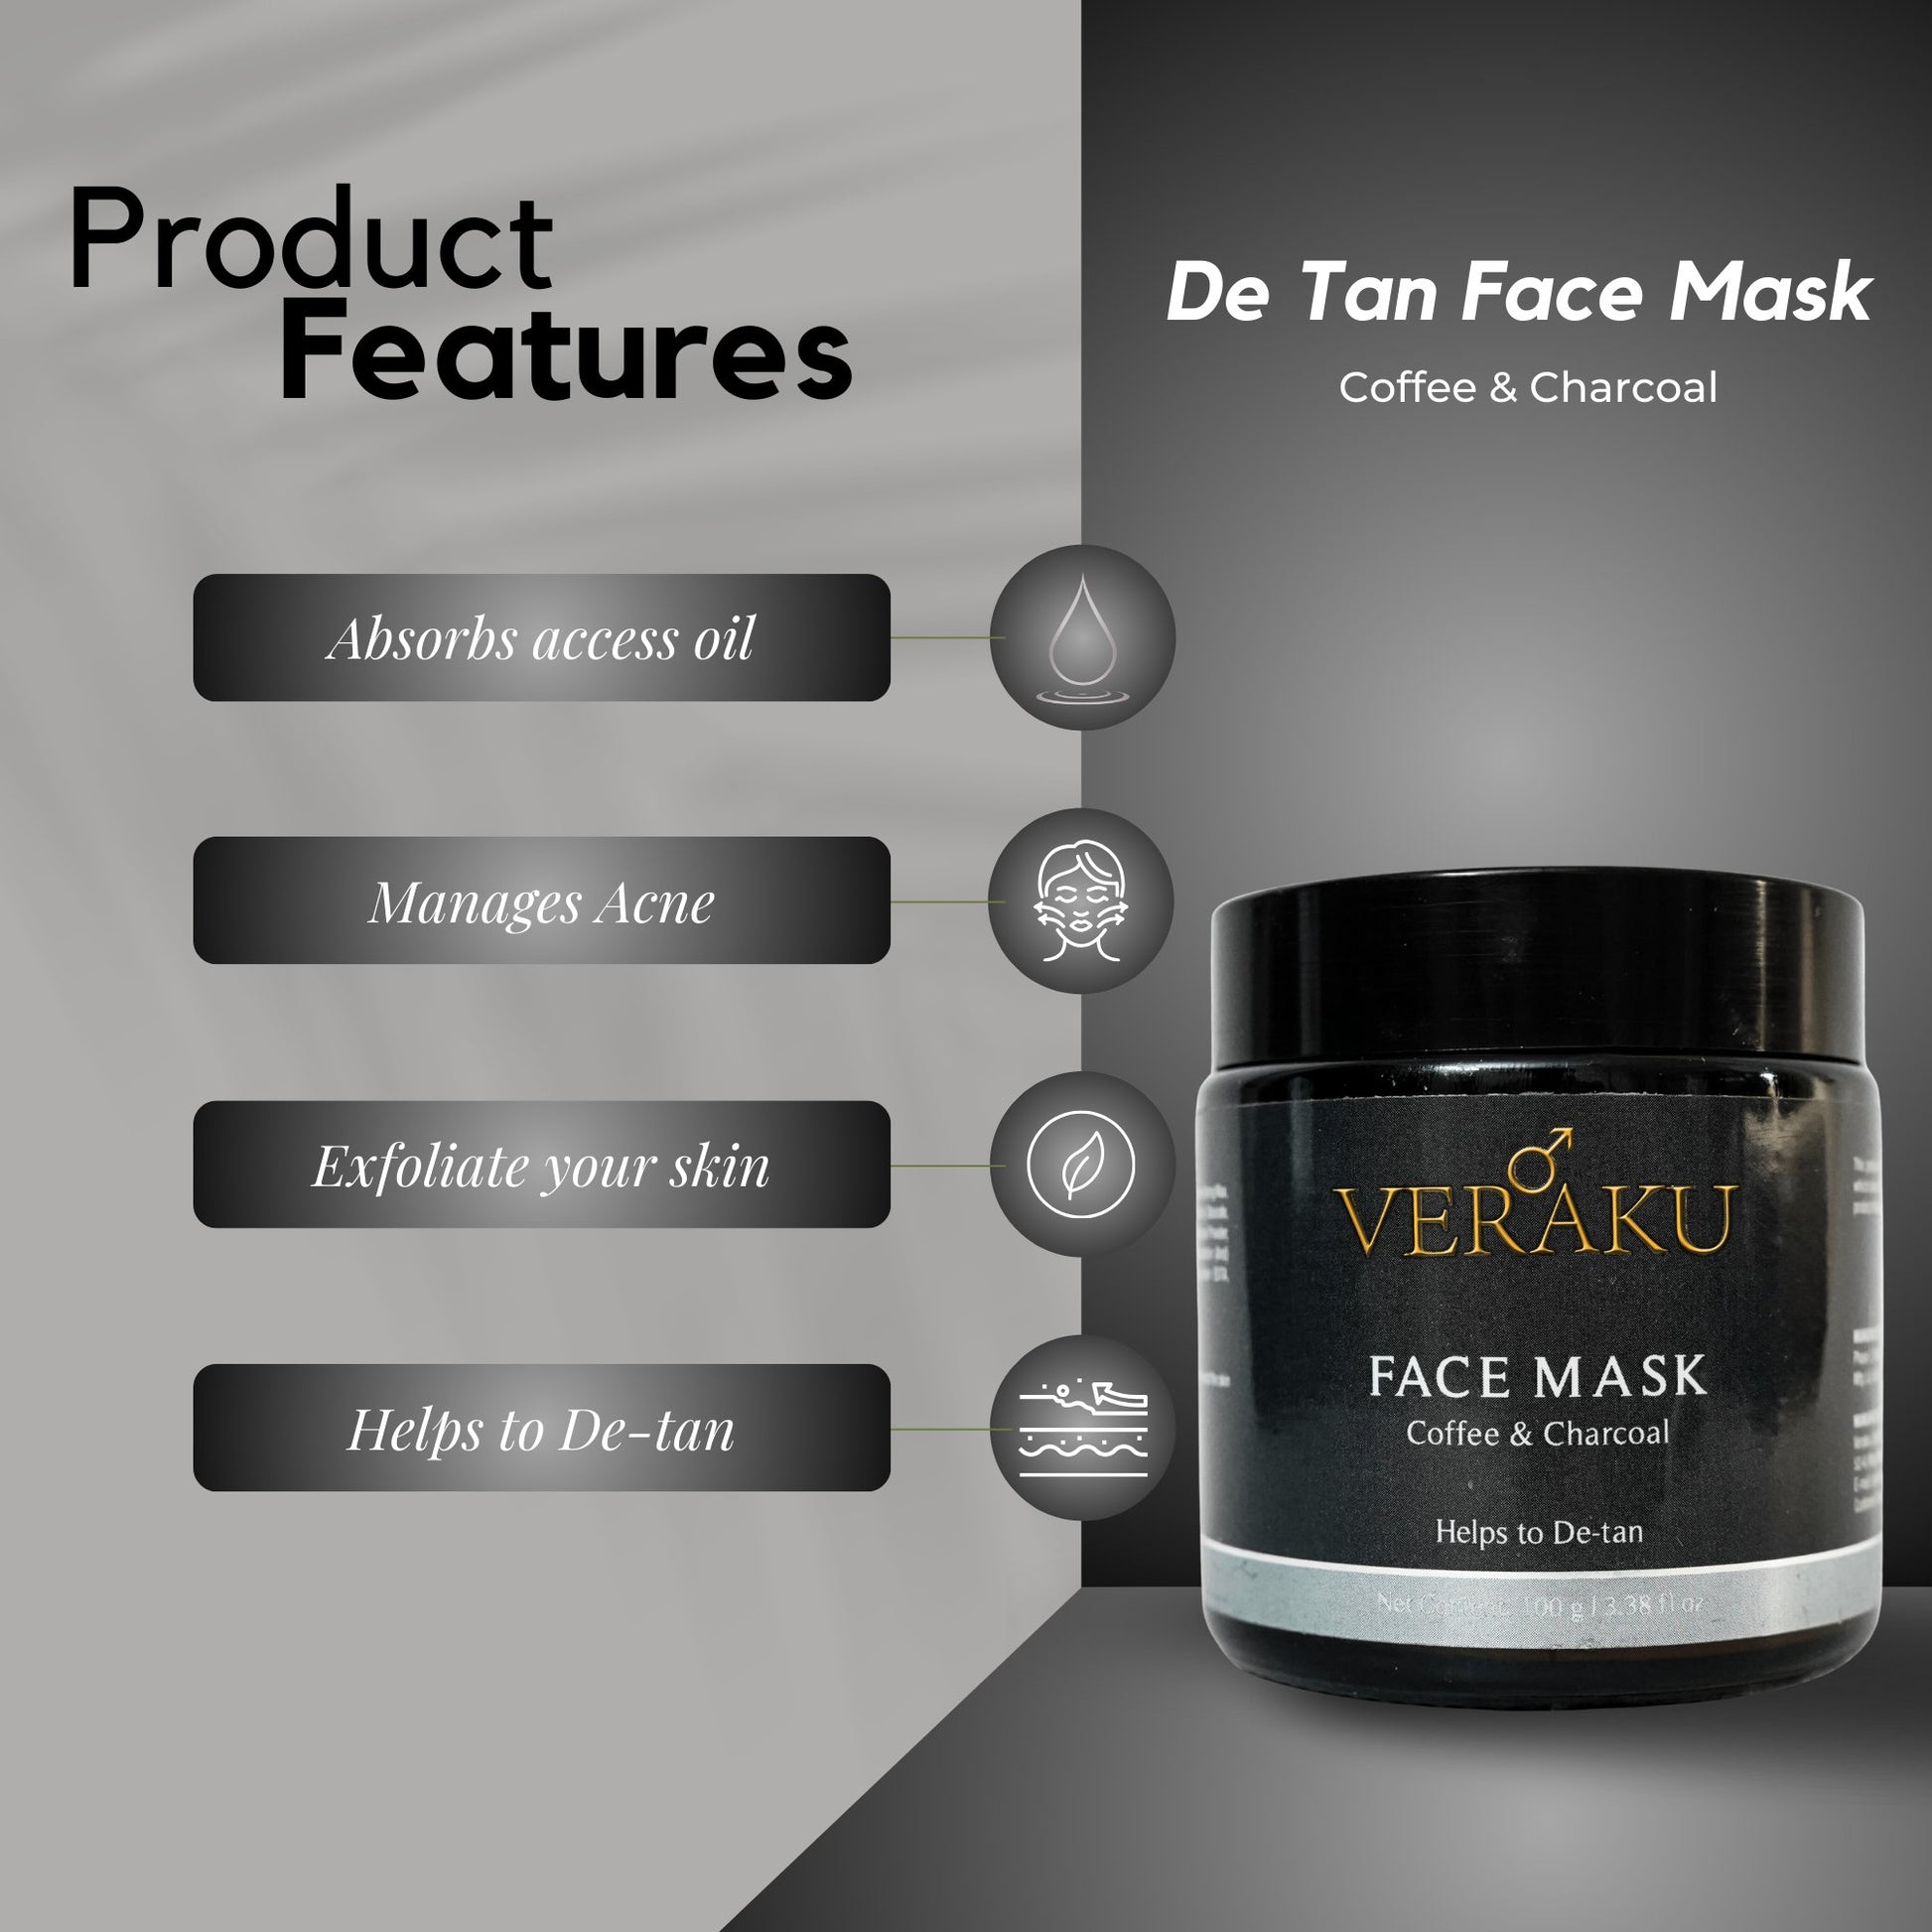 Coffee Face Scrub | Charcoal Face Mask | COMBO PACK | For Men - Veraku